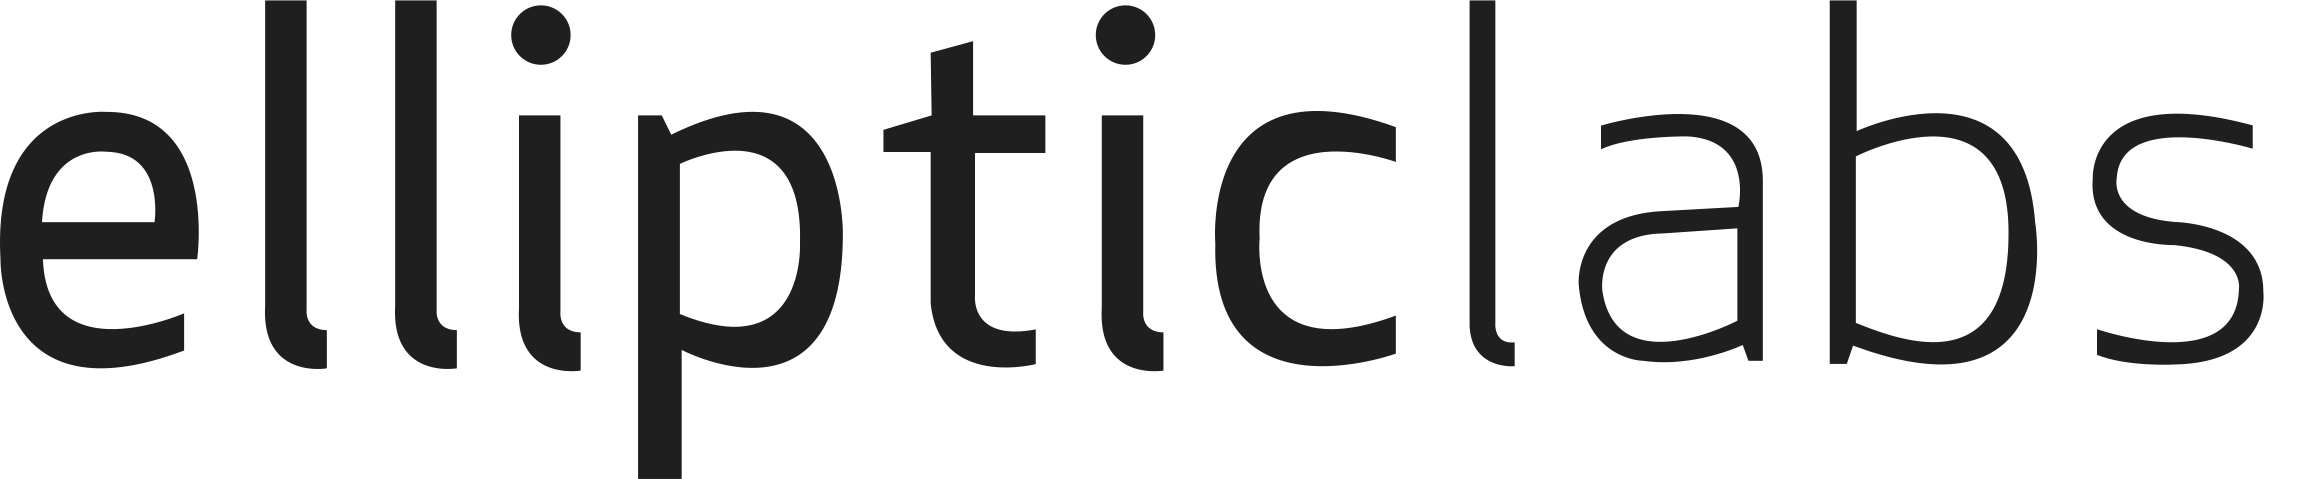 ellipticlabs-logo